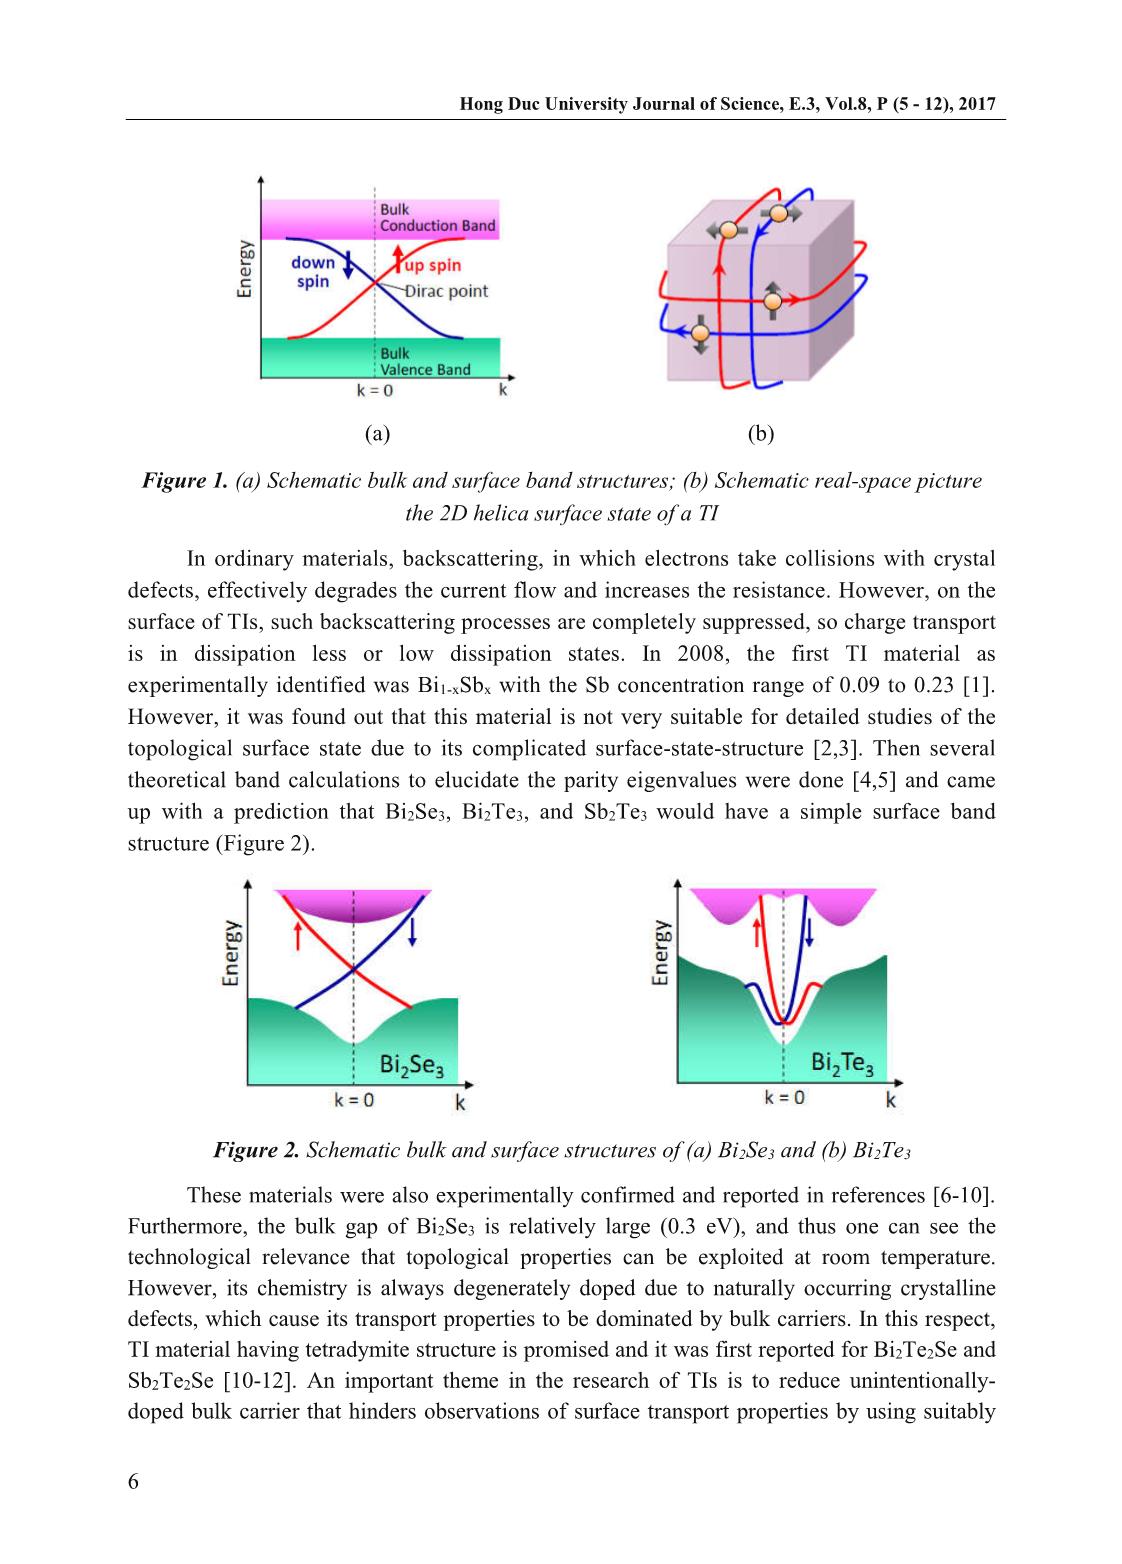 Preliminary study on gete - sbte and sm - b topological insulators trang 2